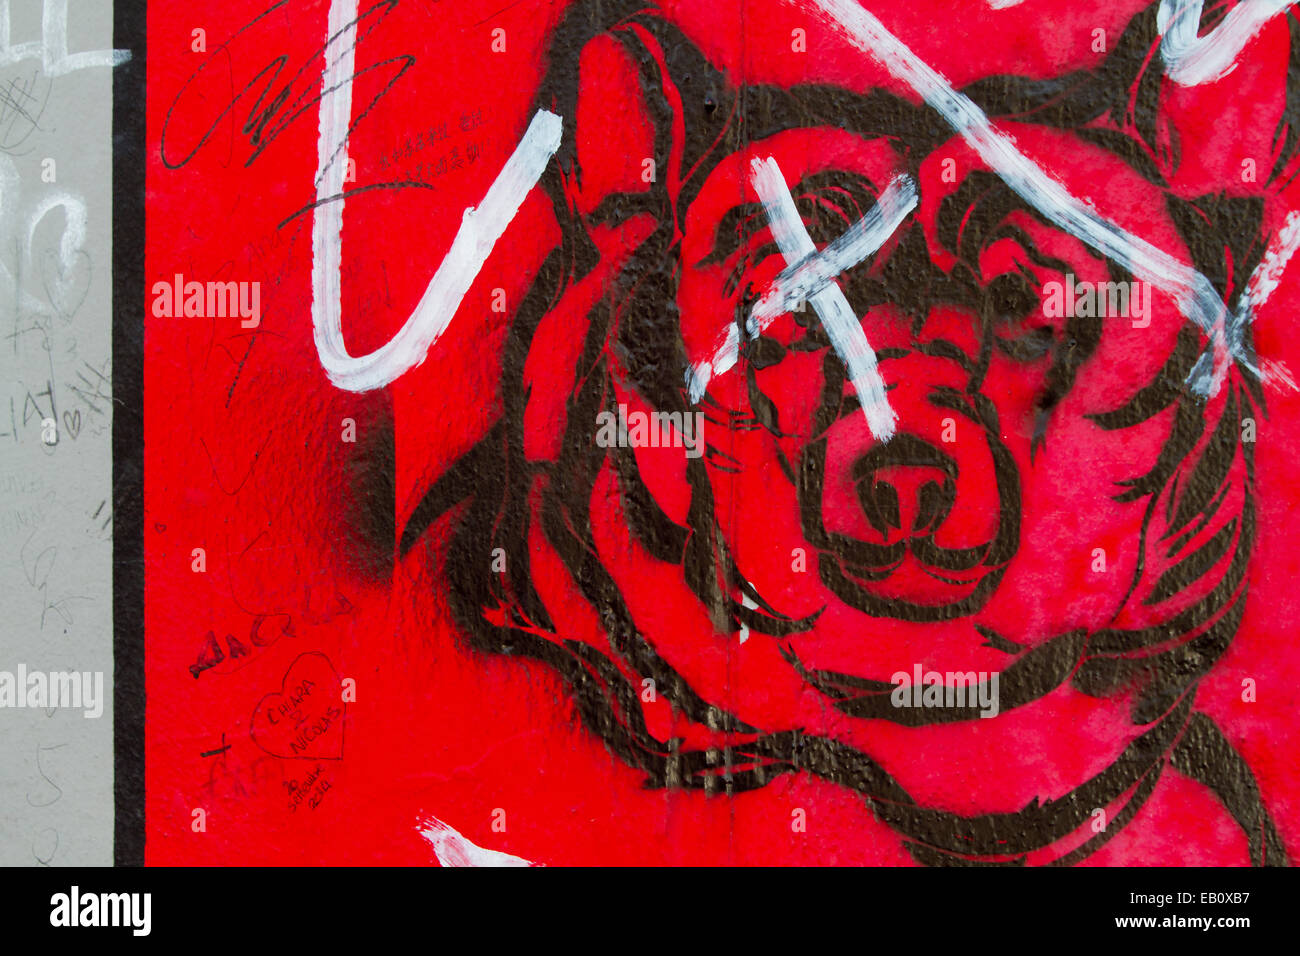 Berlin Wall bear Graffiti street art Tags red Stock Photo